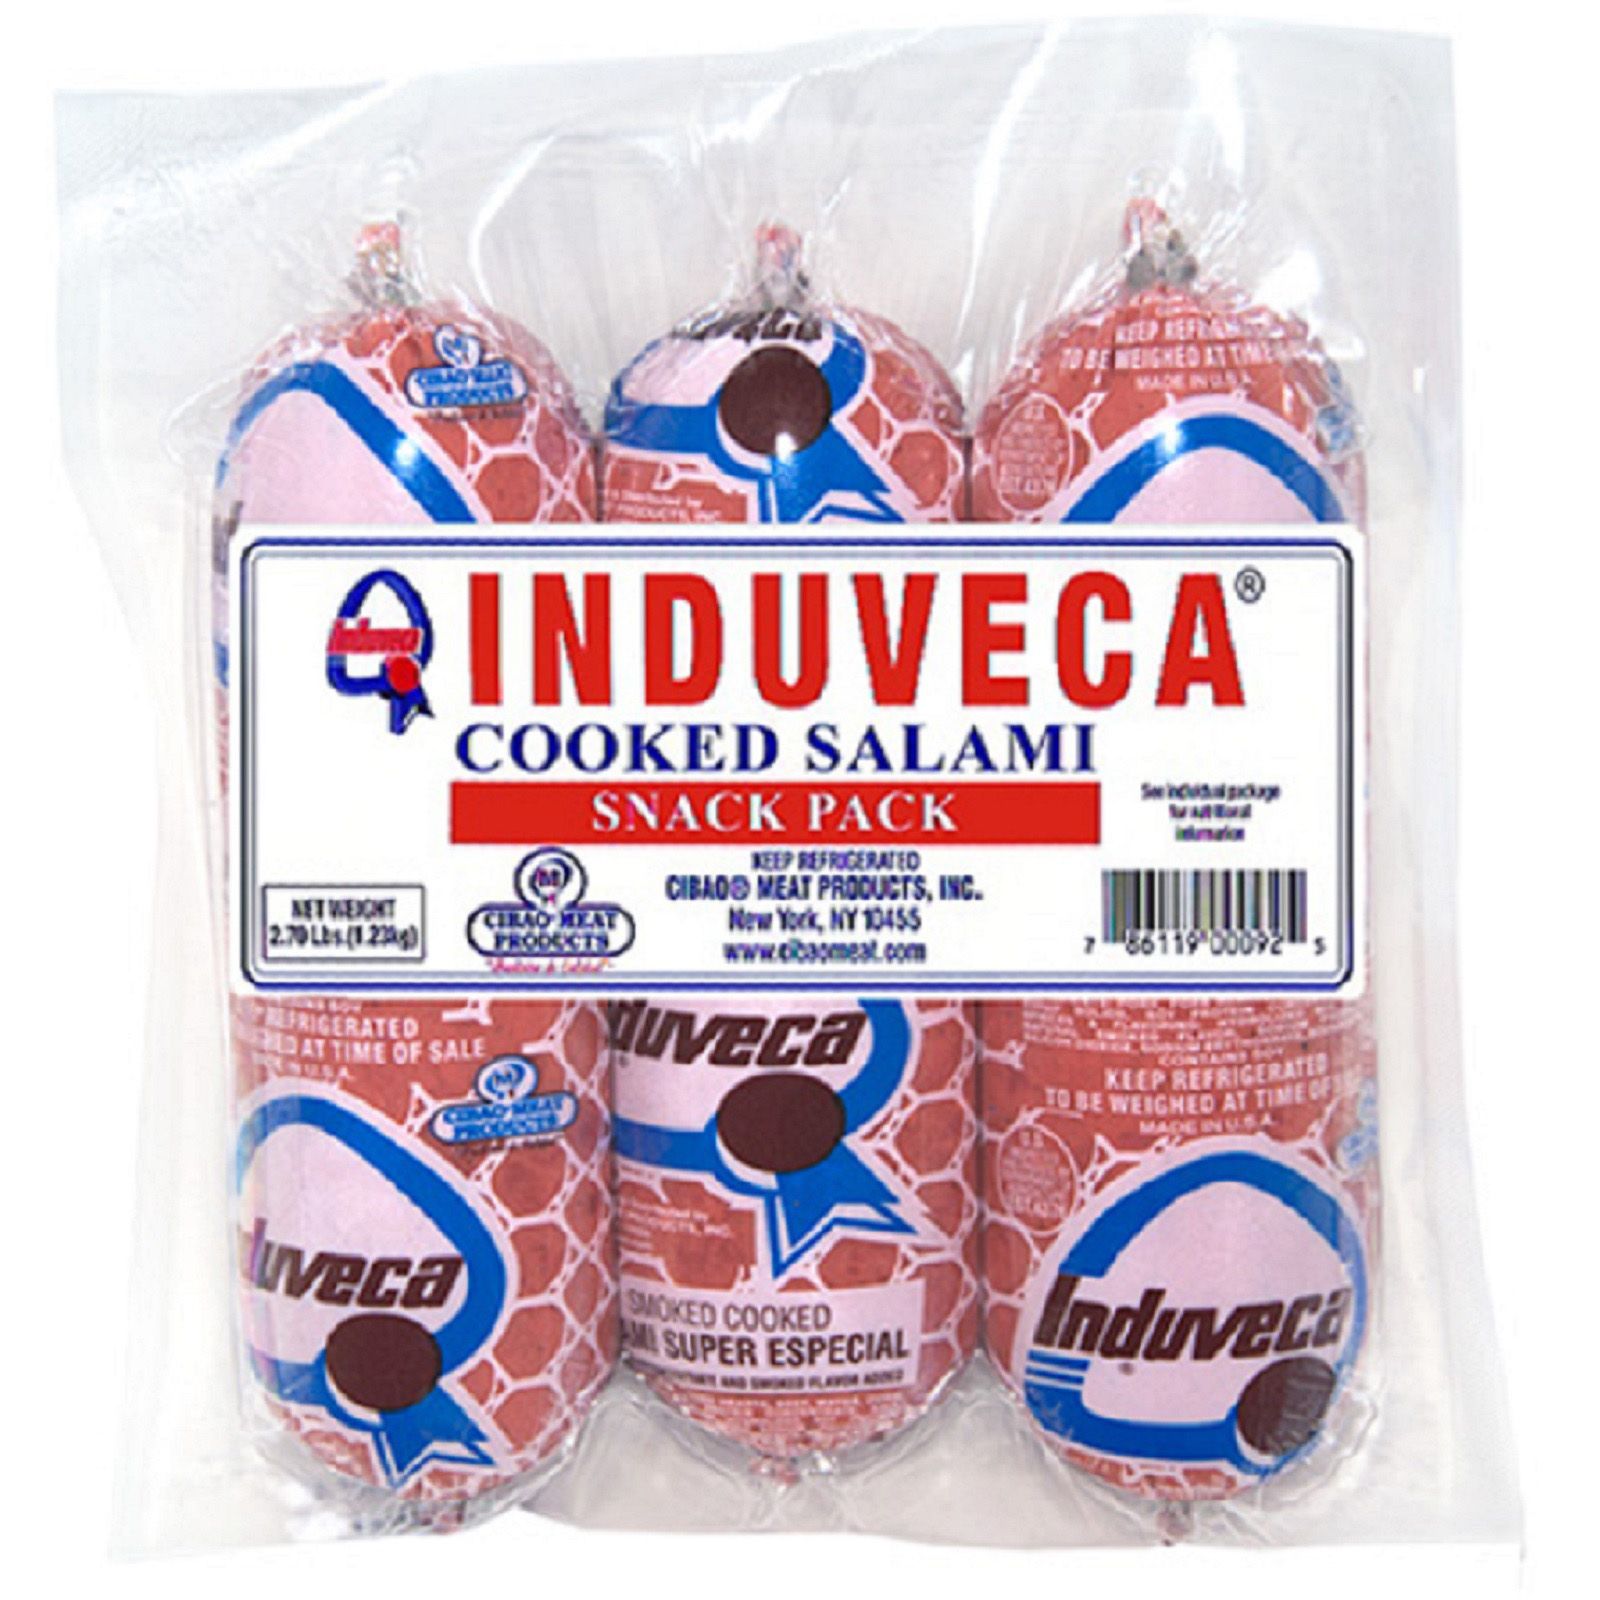 Induveca Cooked Salami Snack Pack, 3 ct.